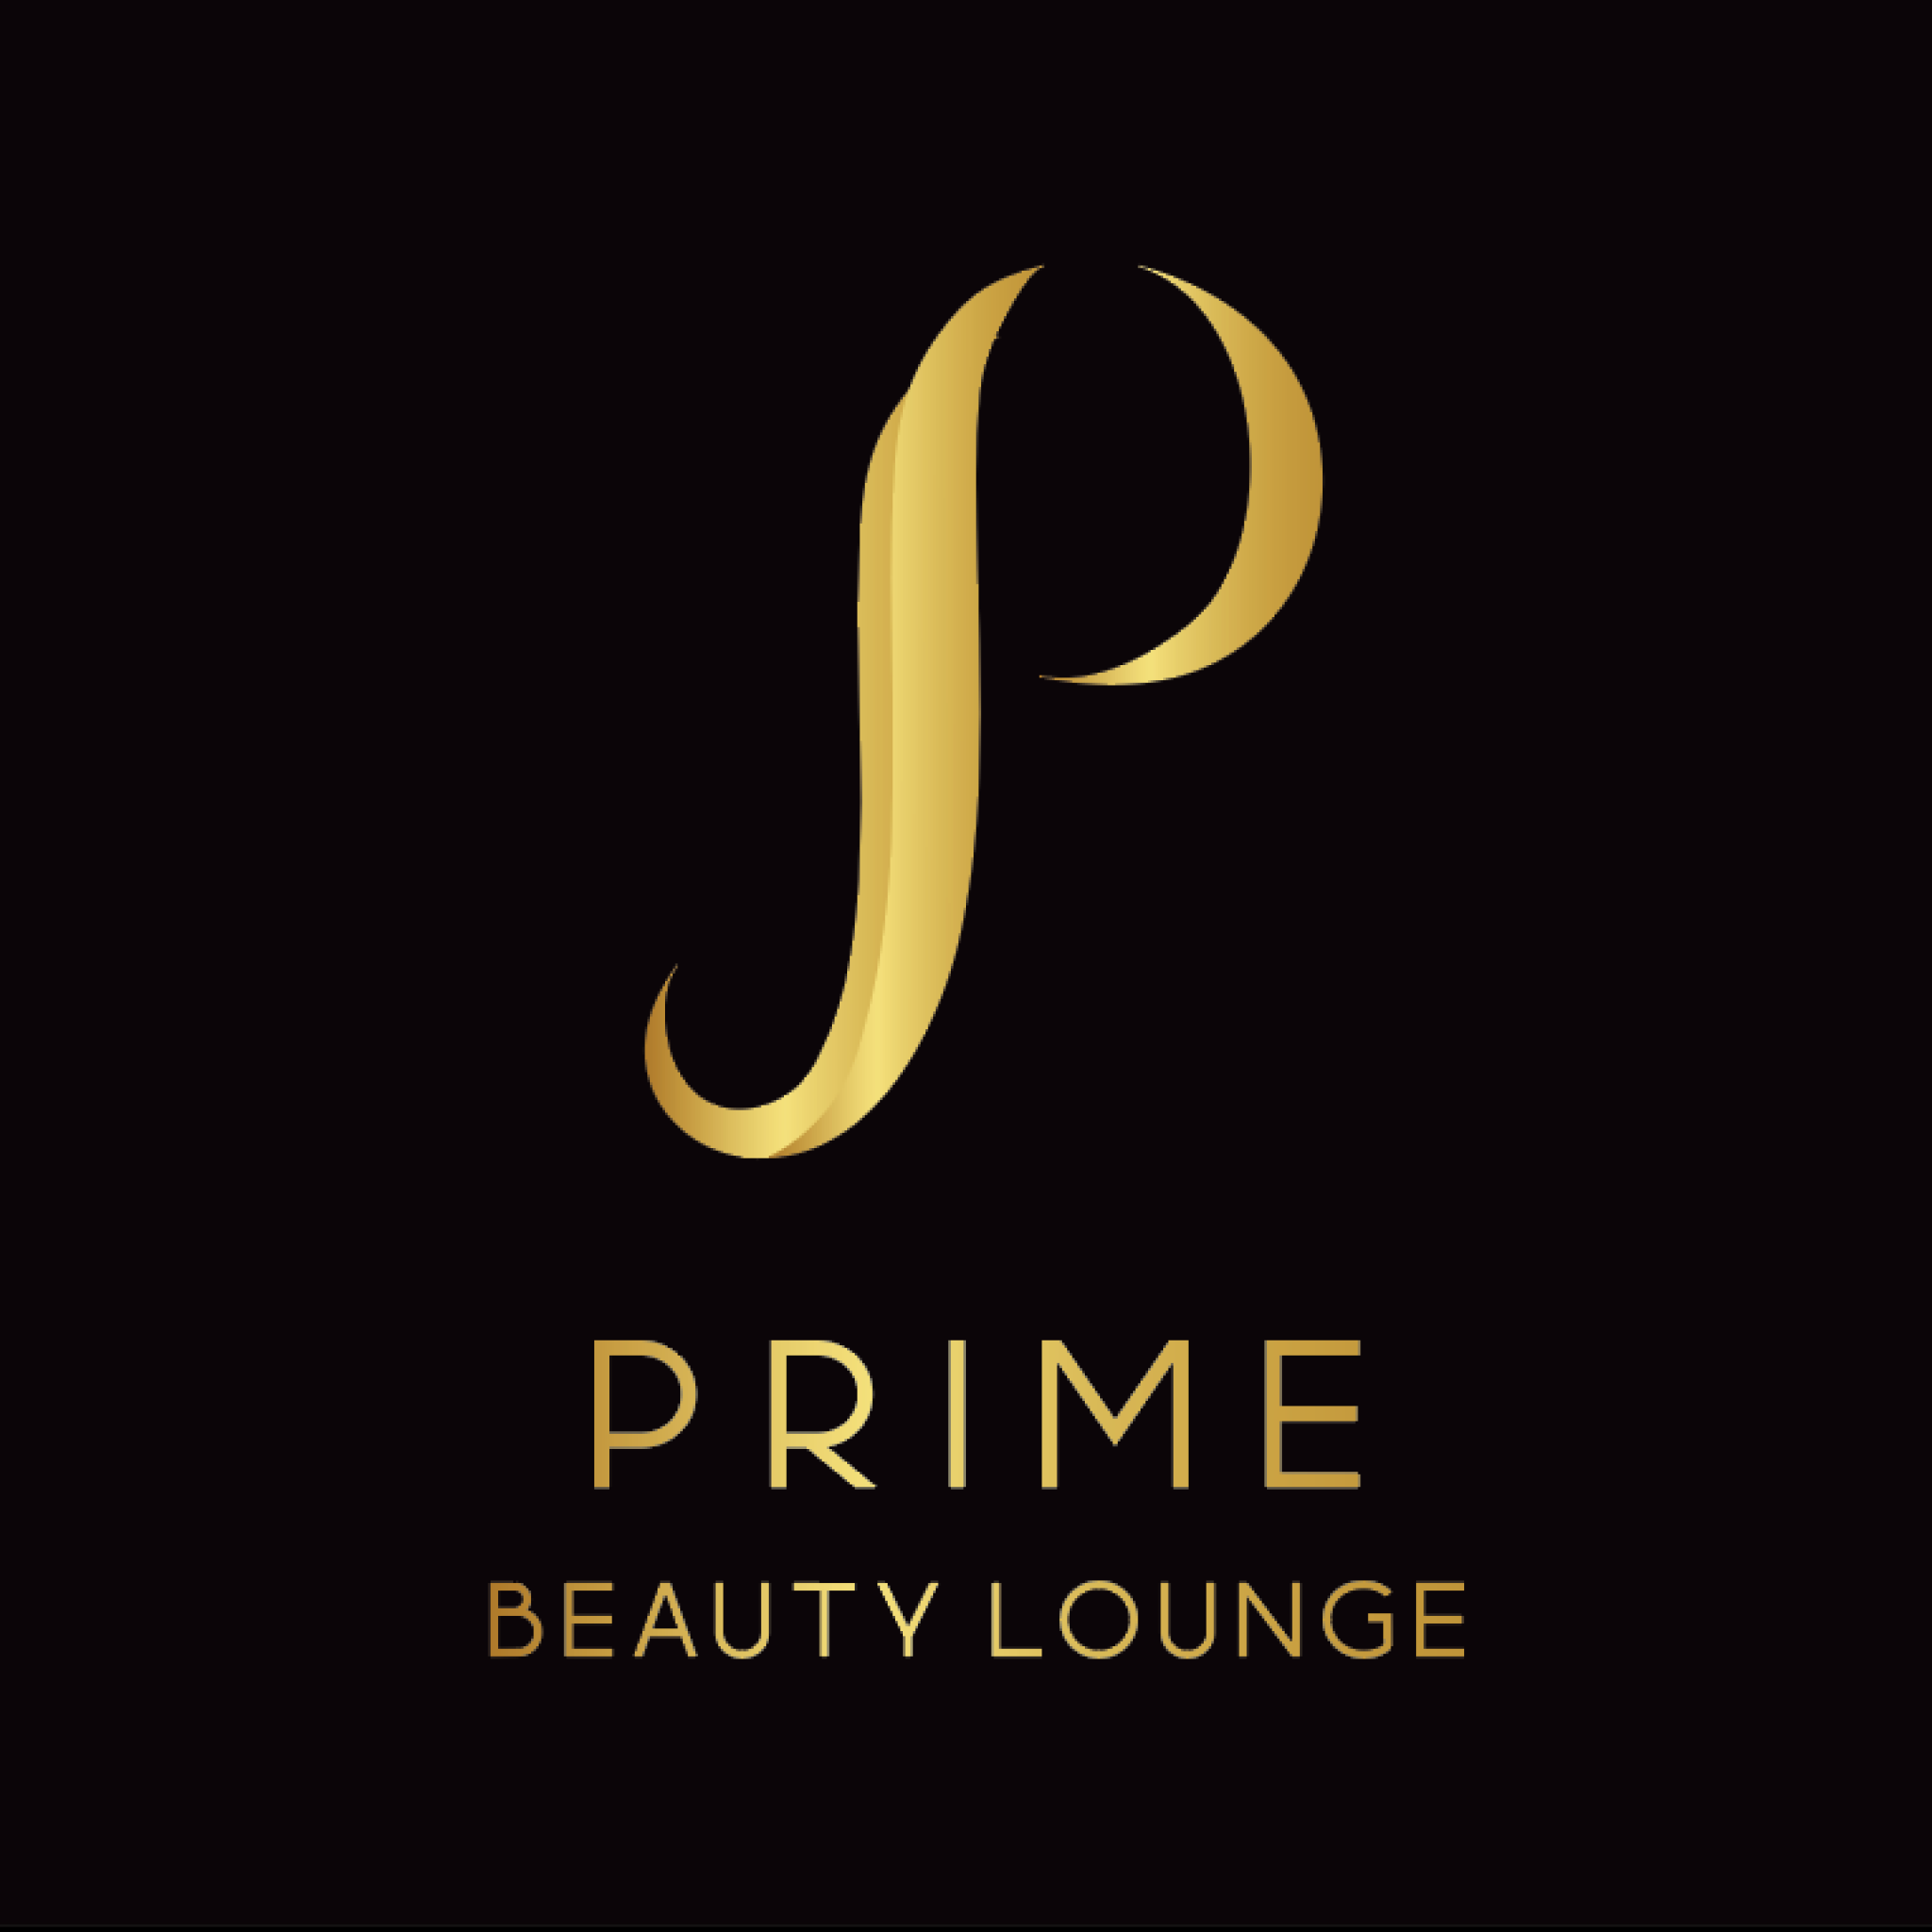 Prime Beauty Lounge